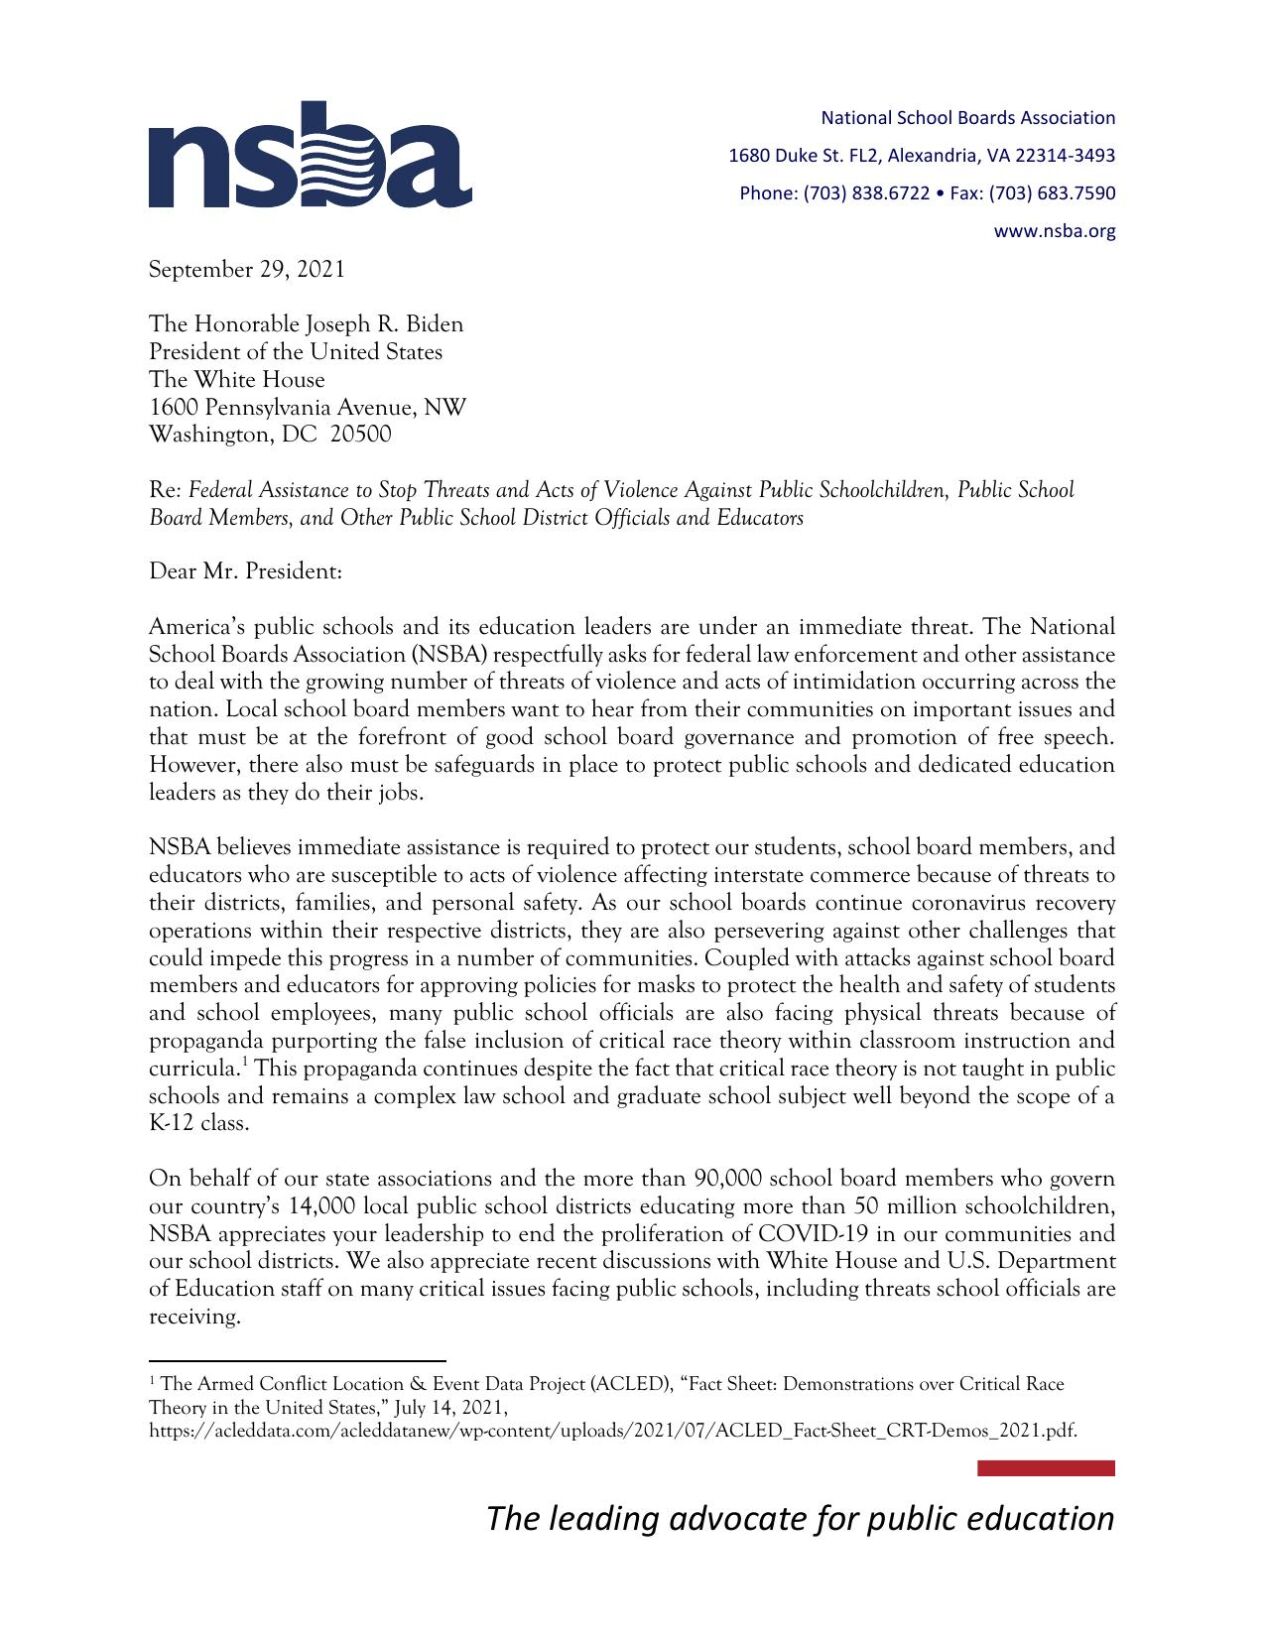 NSBA letter to federal gov't